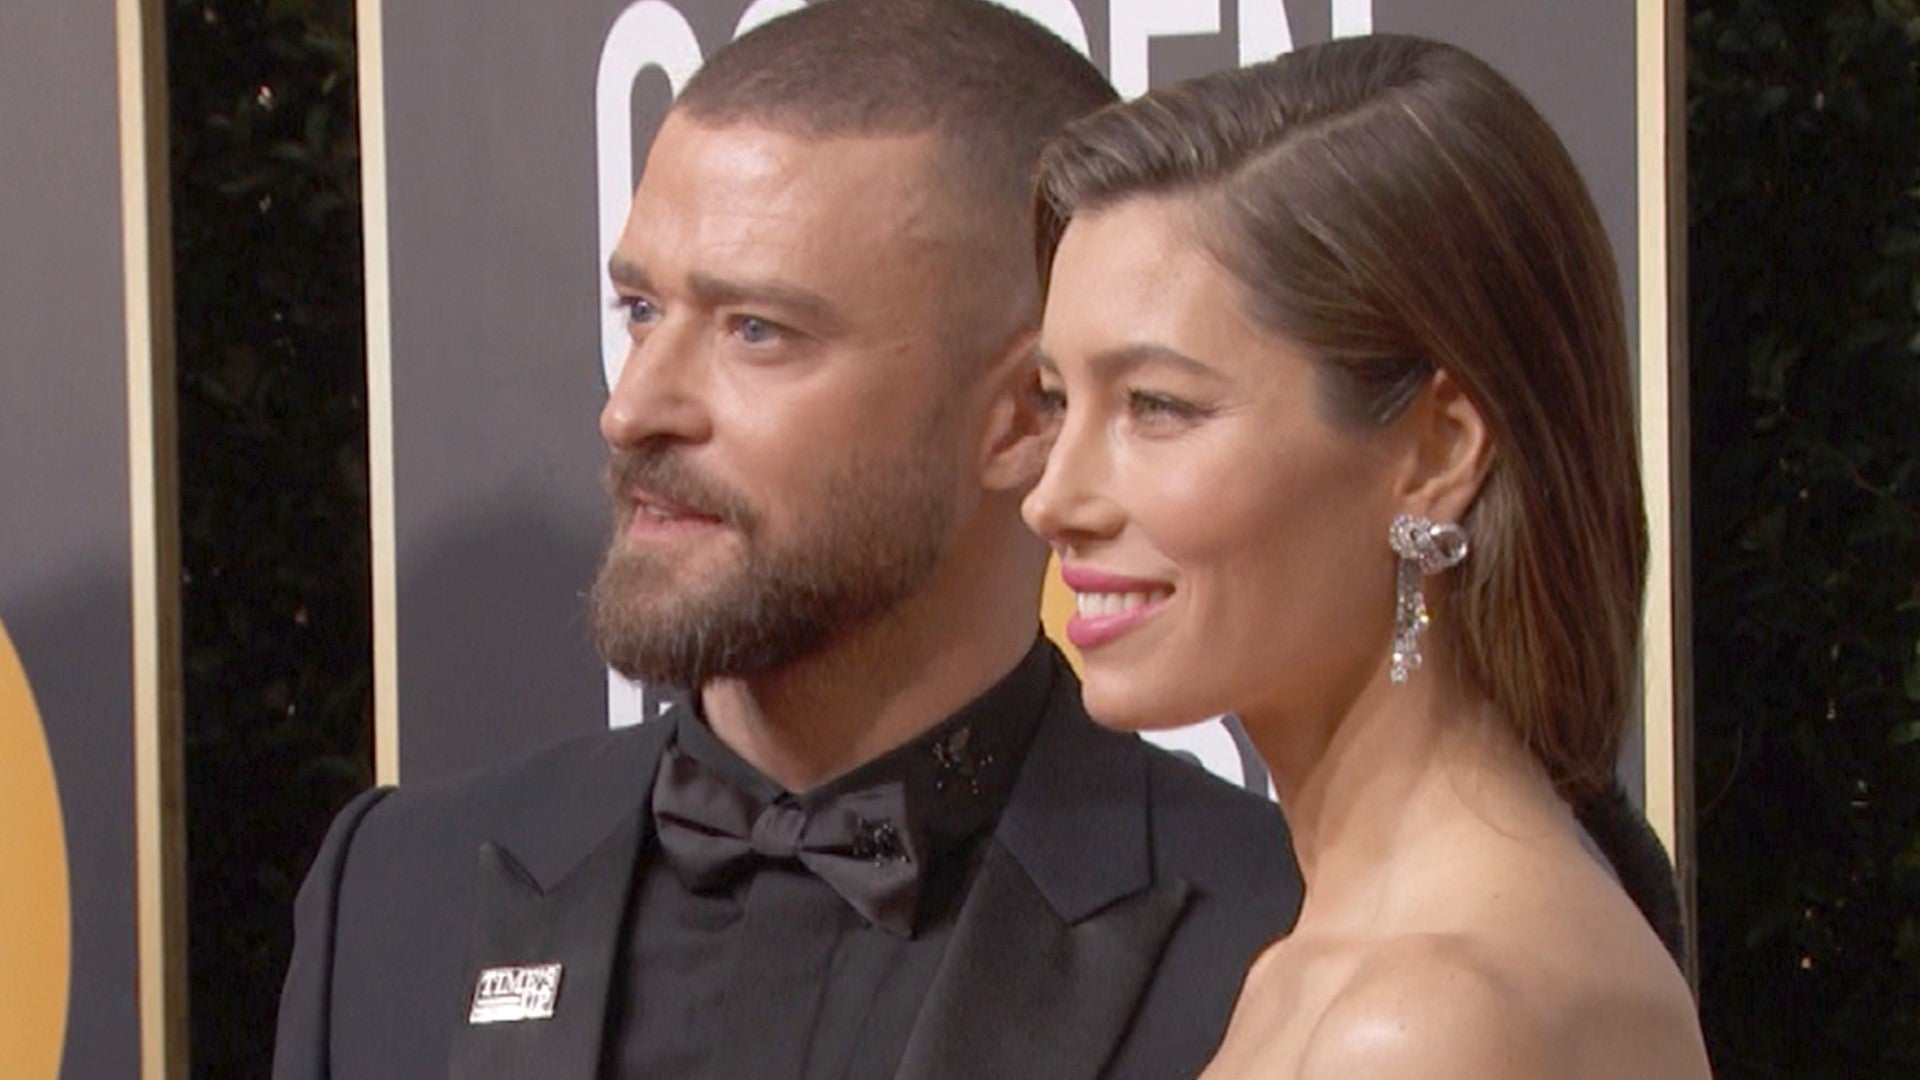 Justin Timberlake, Jessica Biel's Rare Appearance at Gala: Photos